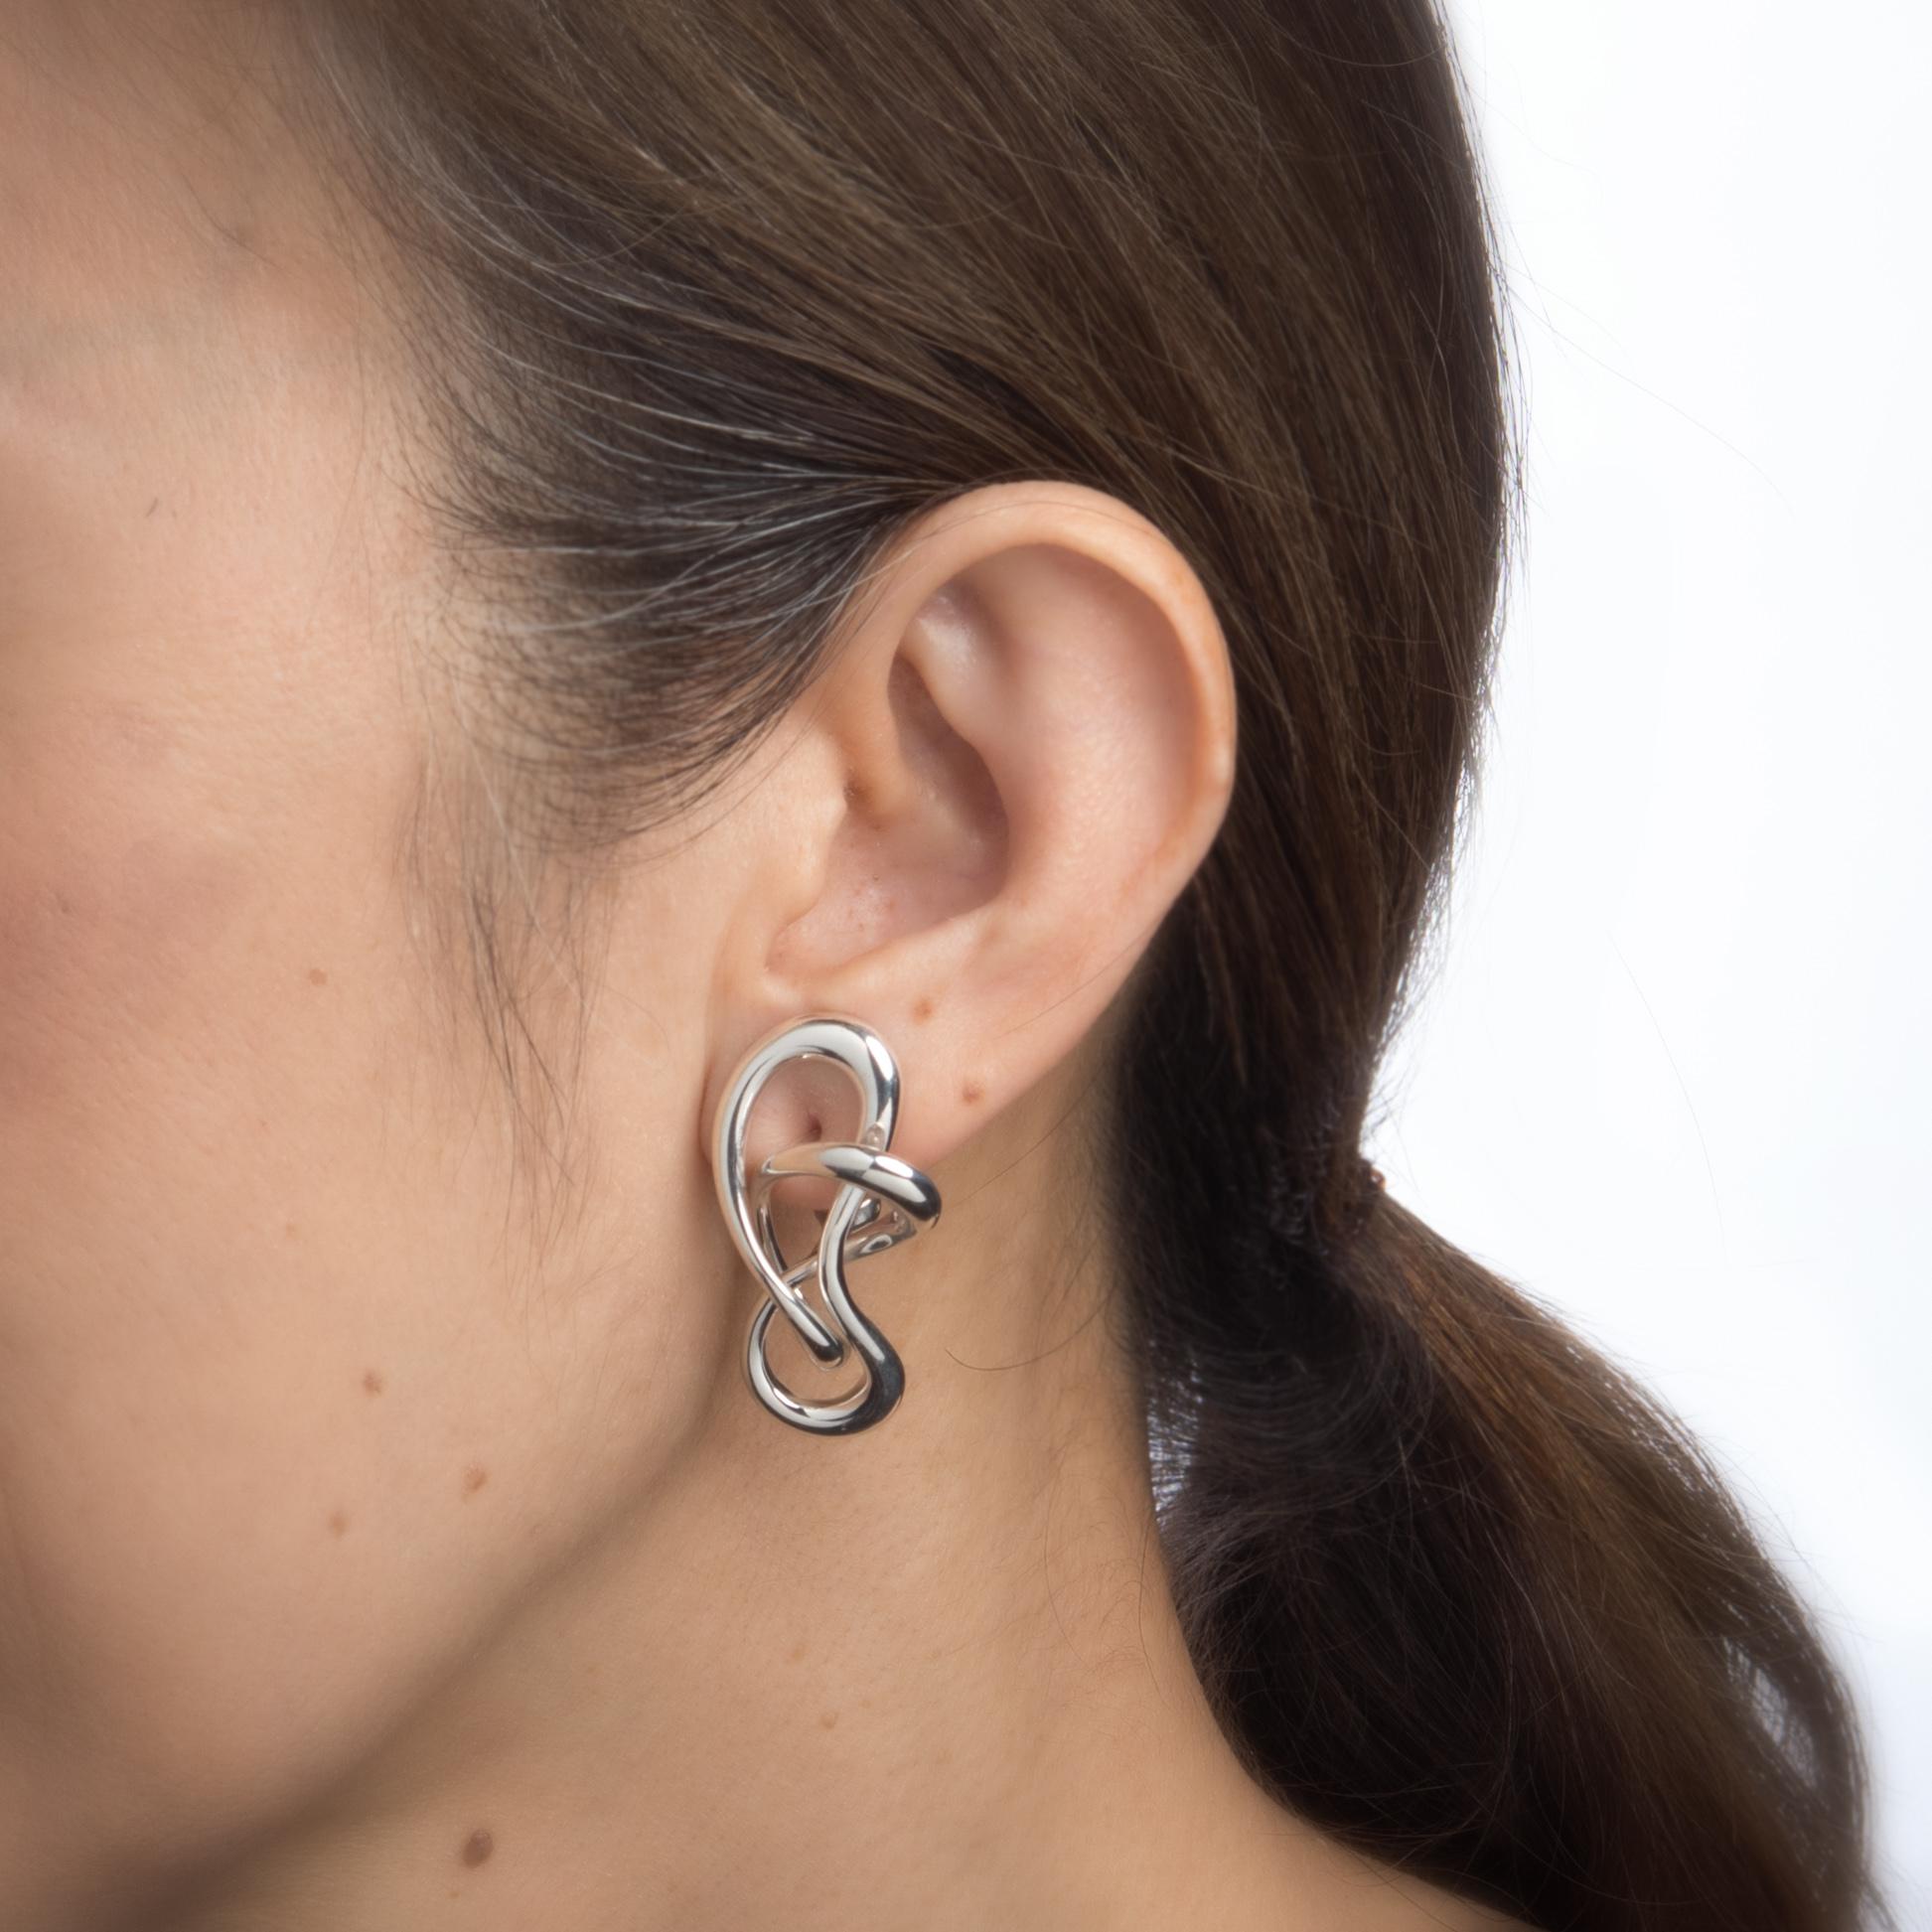 Modern Angela Cummings Earrings Vintage Scribble Sterling Silver Jewelry Twist